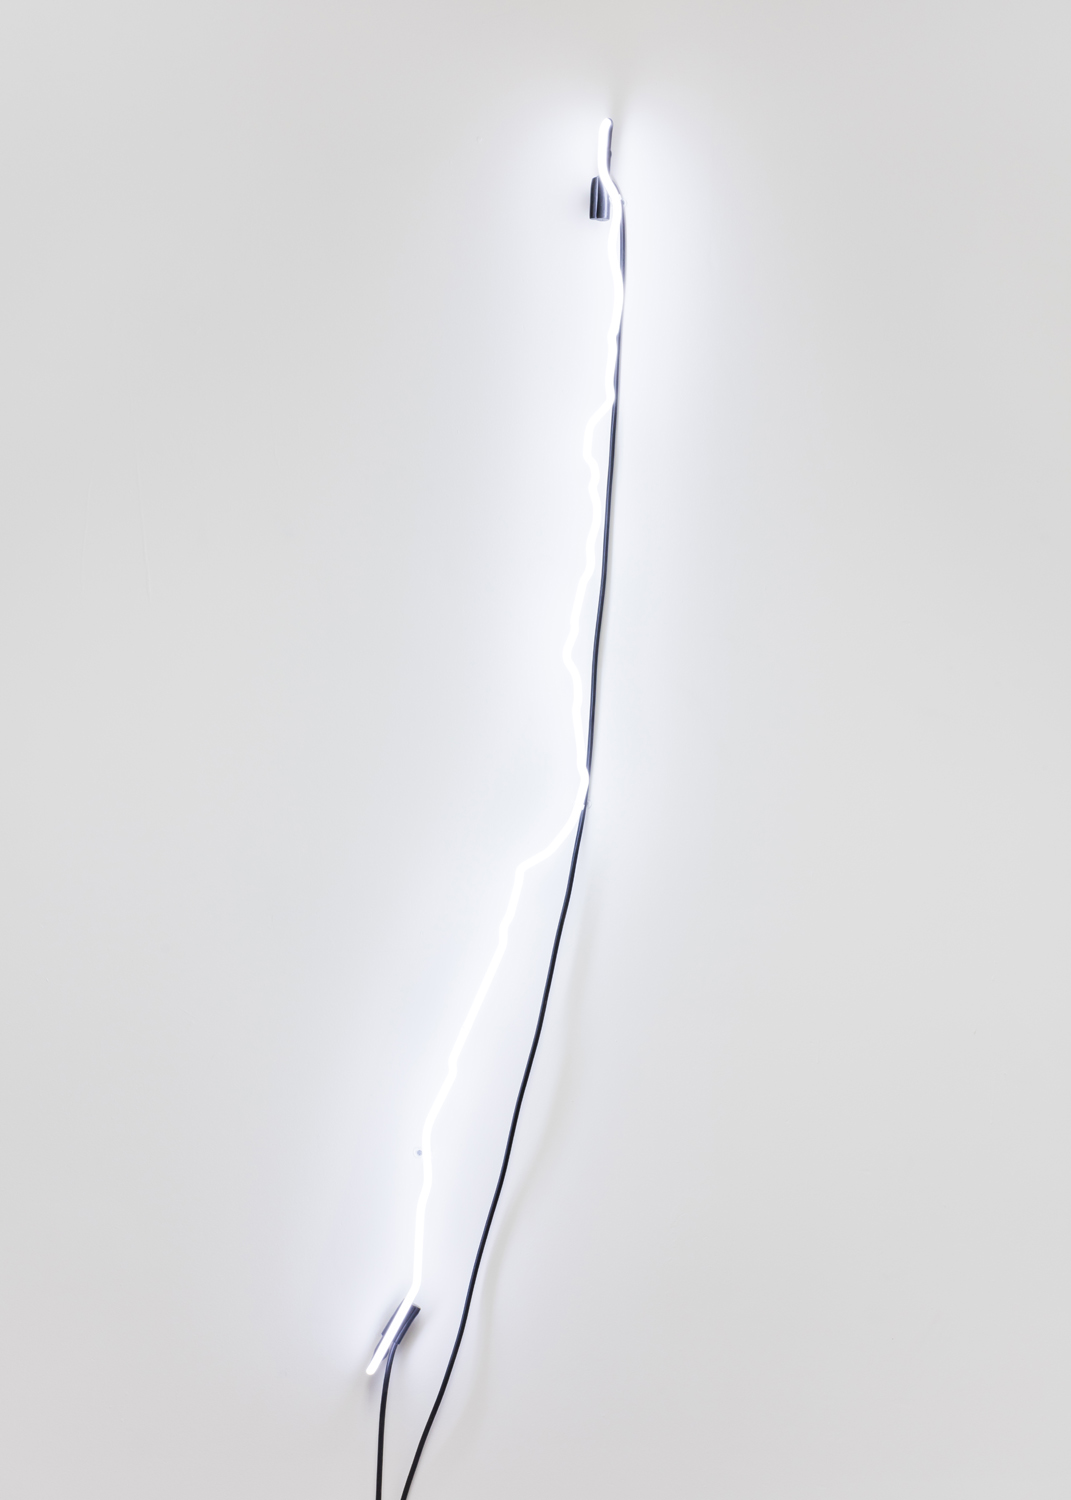  Phoebe Berglund,  Broadway , 2019. Neon tubing. 65 x 8 x 3 inches. 